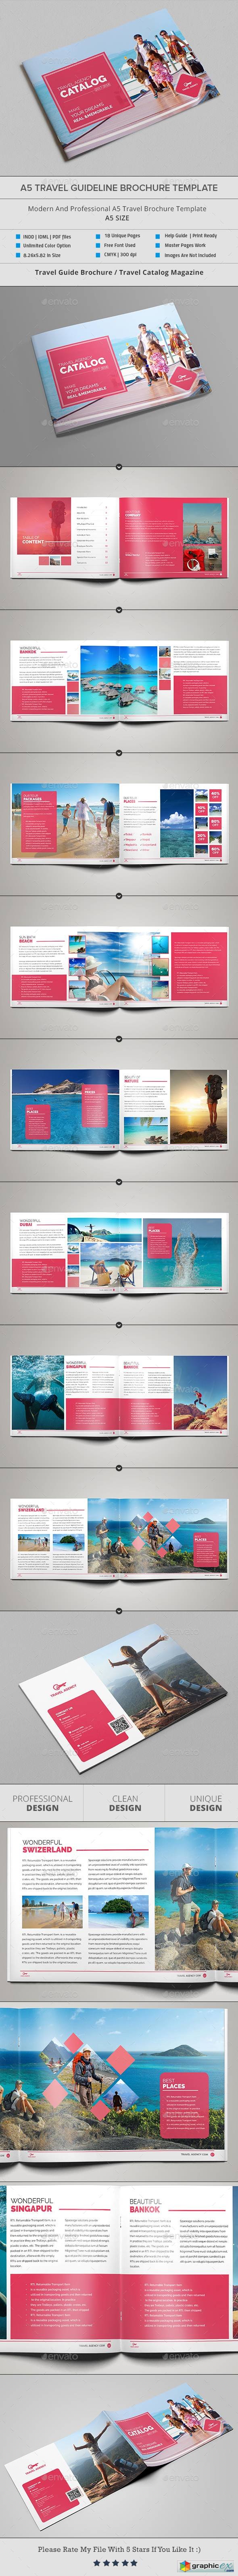 A5 Travel Guideline Brochure Catalog